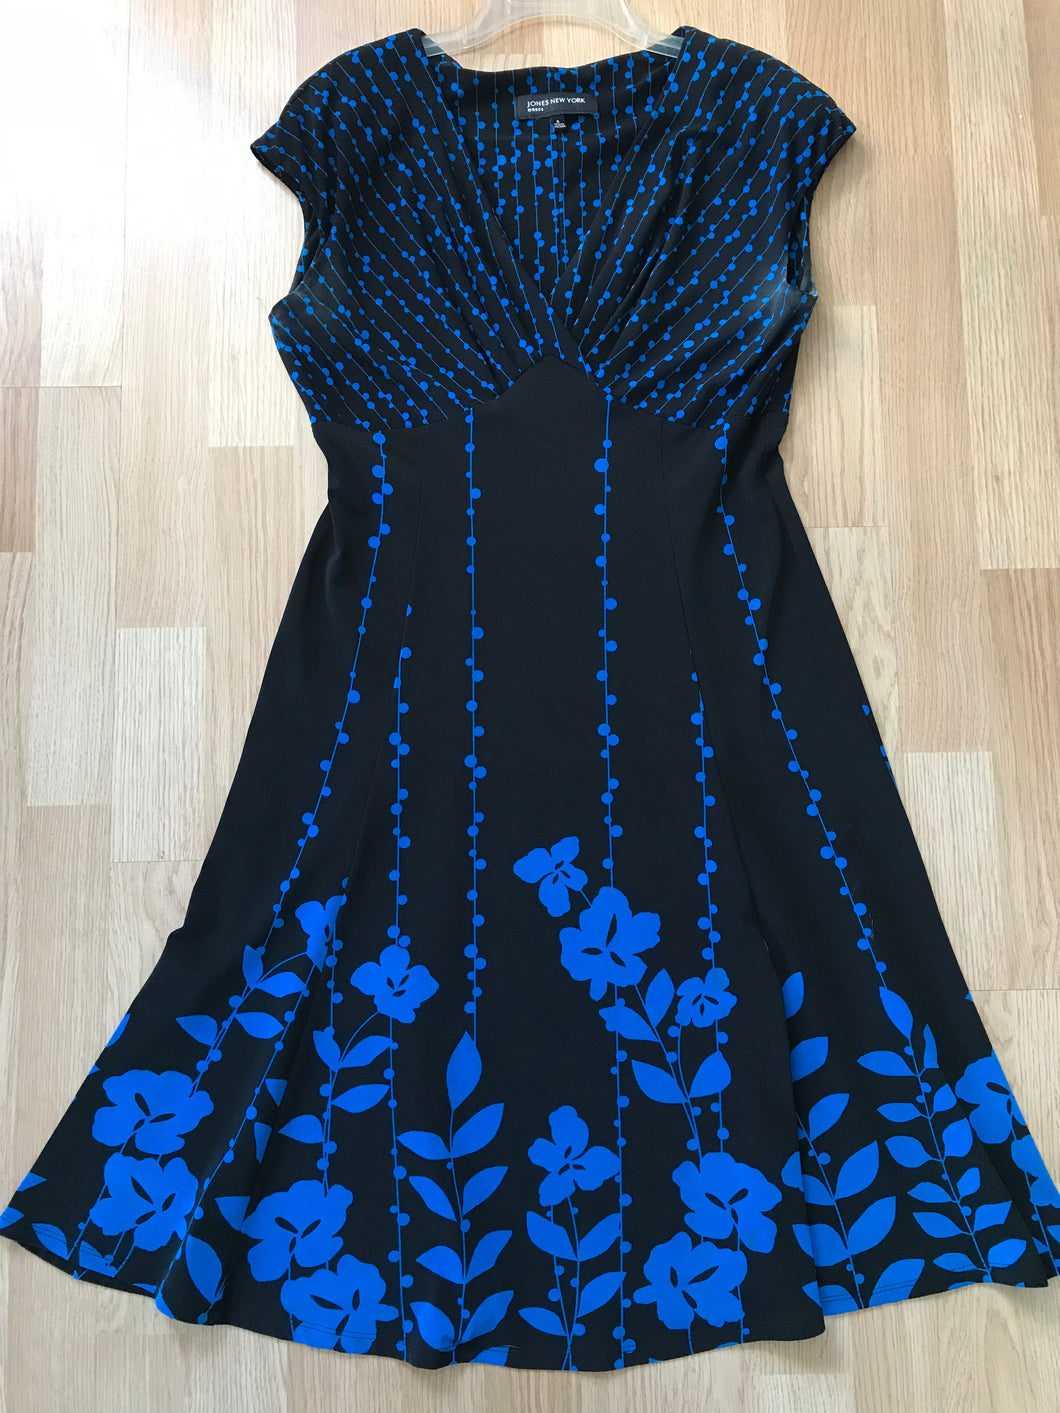 Jones New York black and blue floral dress size 6 6